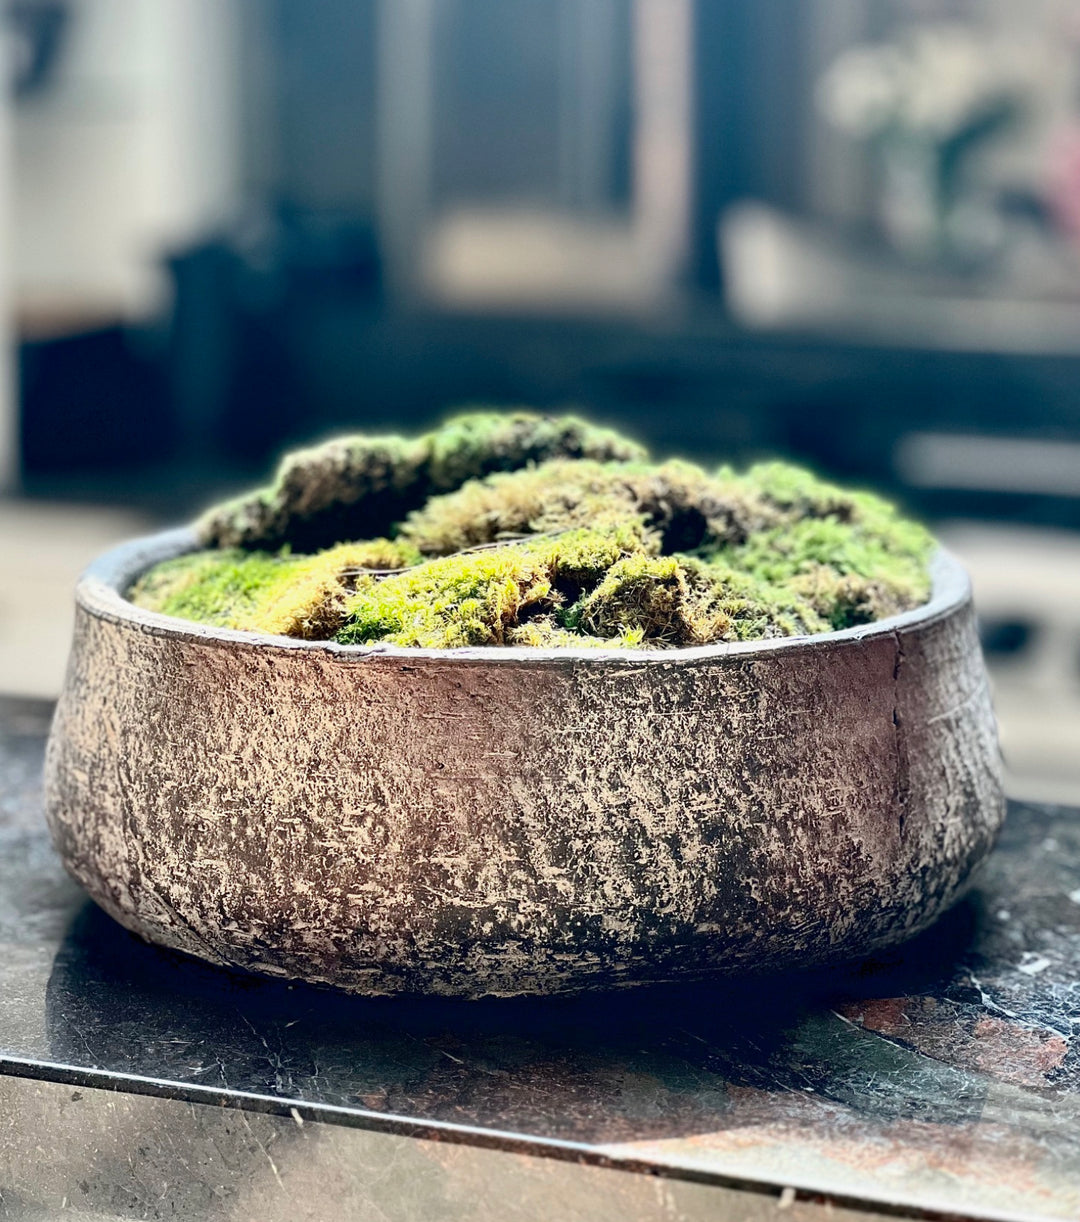 Brown terracotta bowl